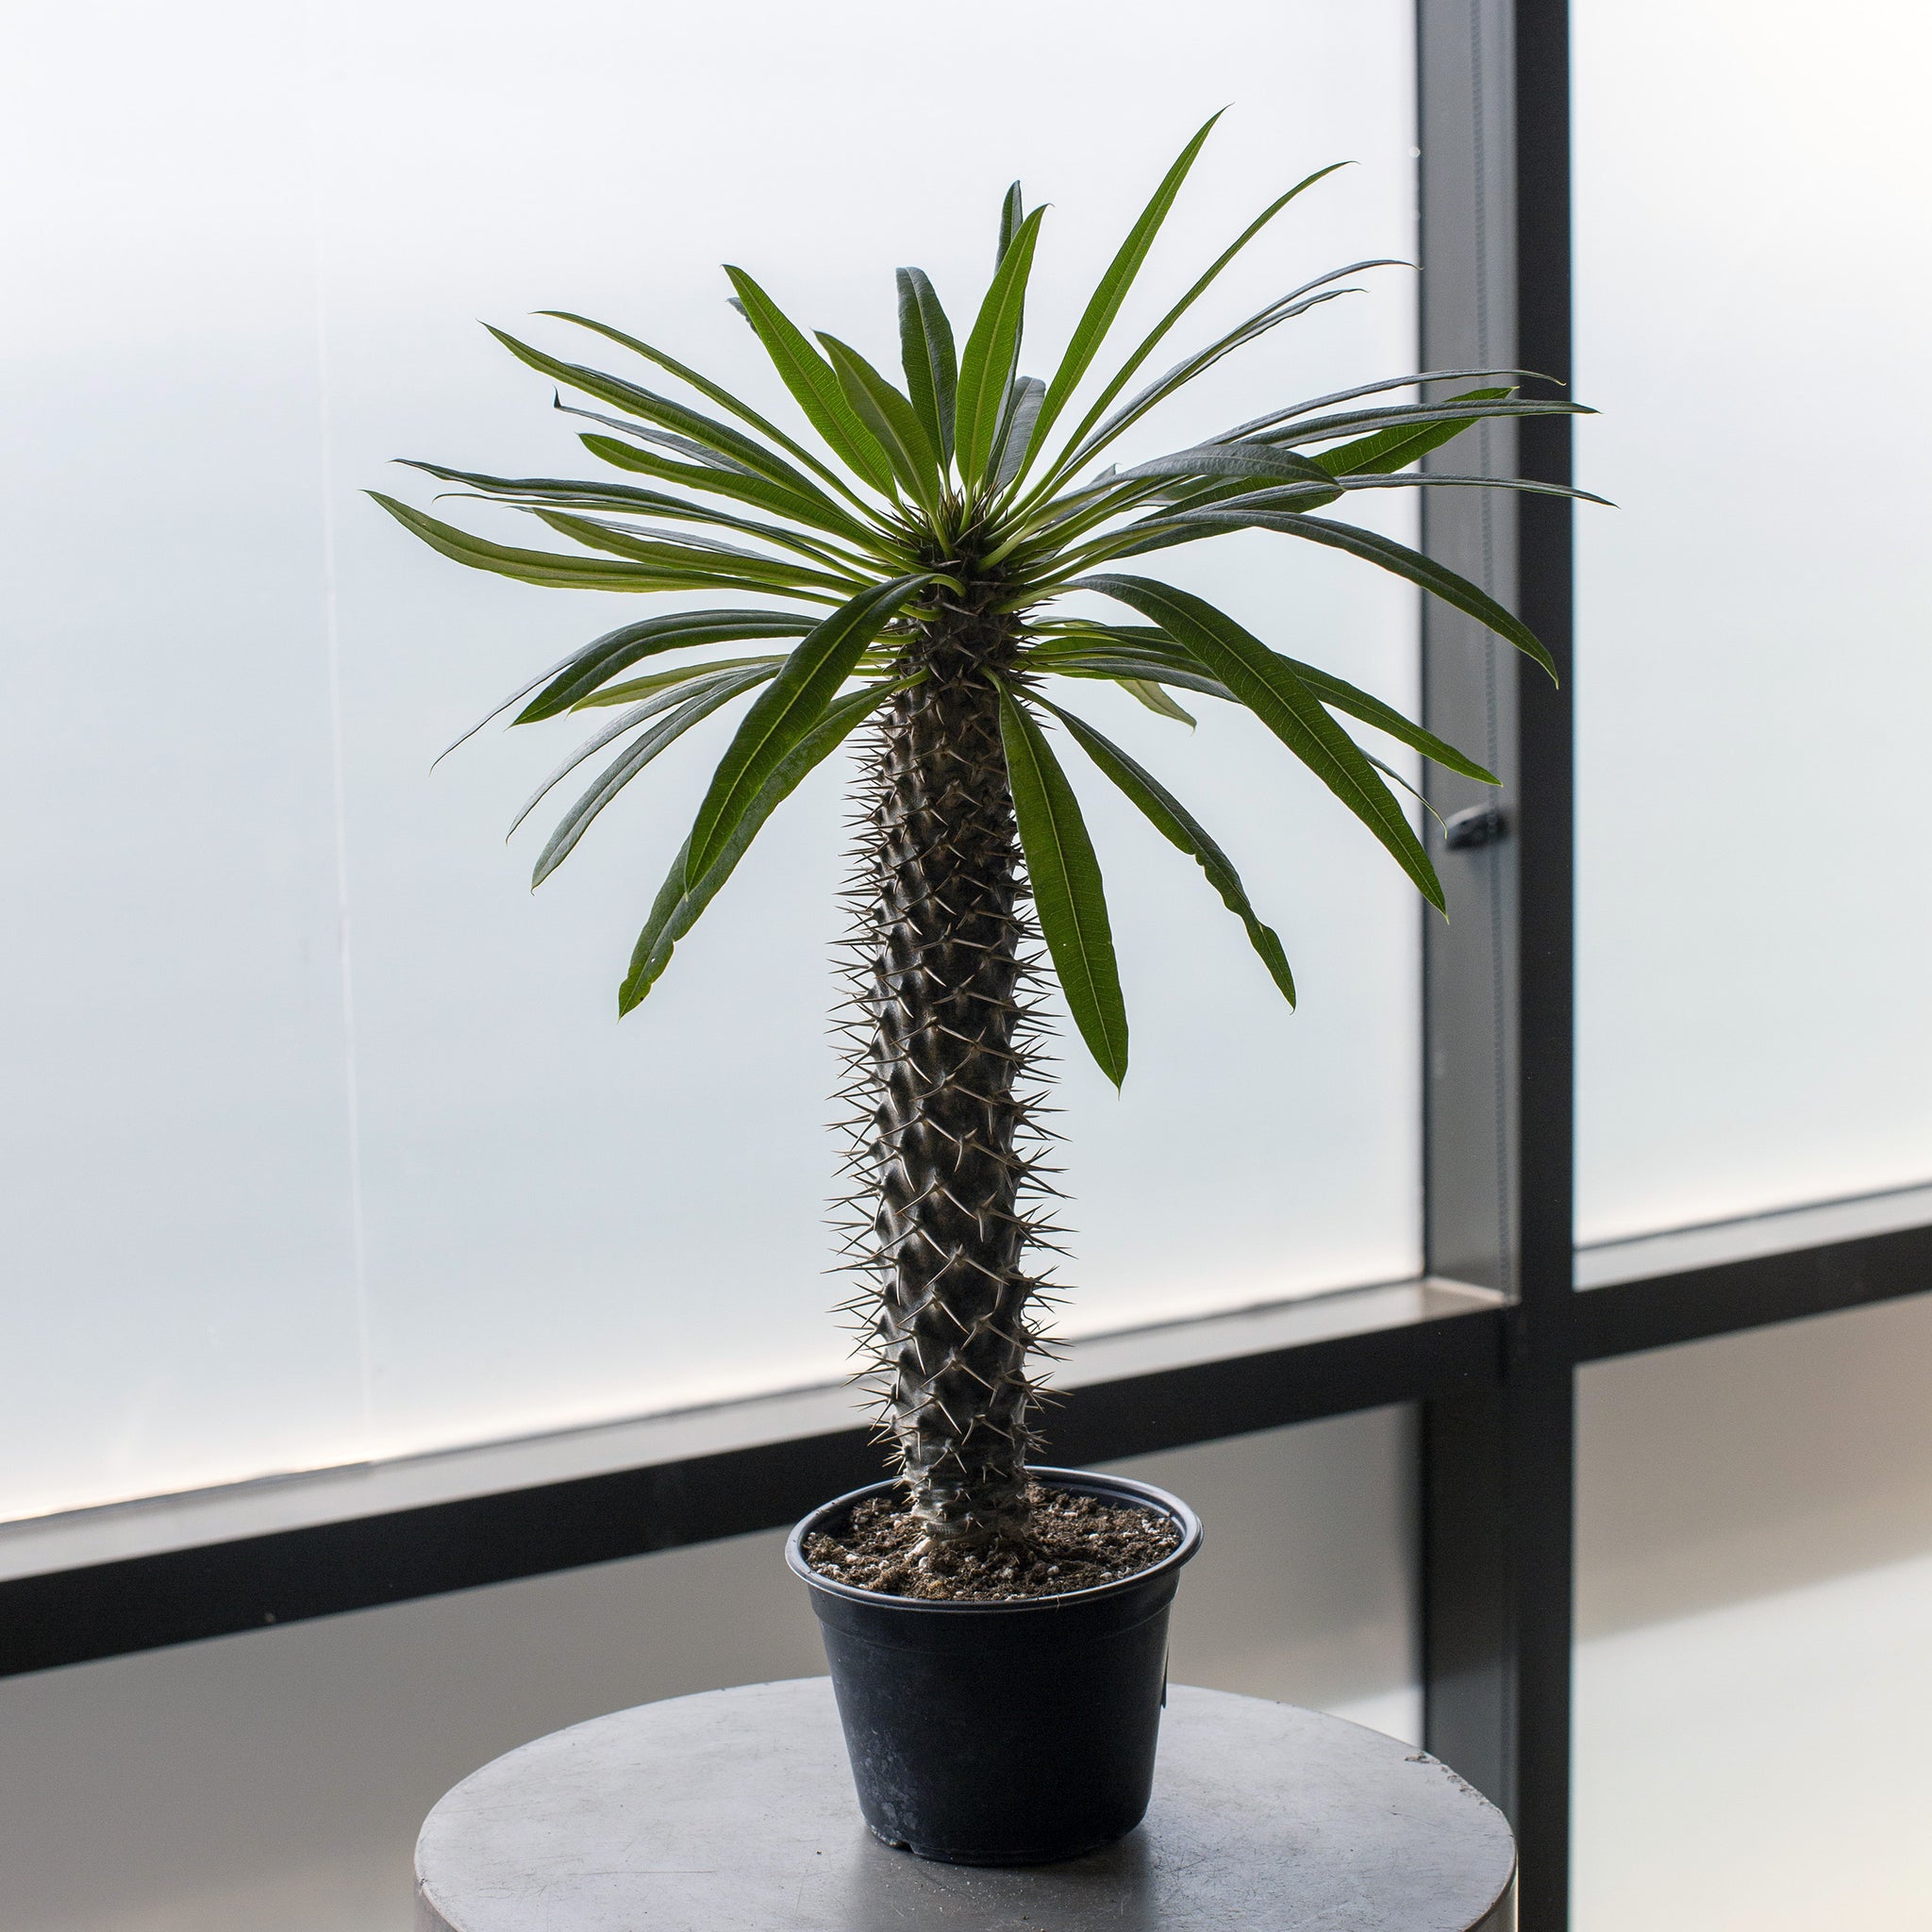 Pachypodium lamerei 'Madagascar Palm'